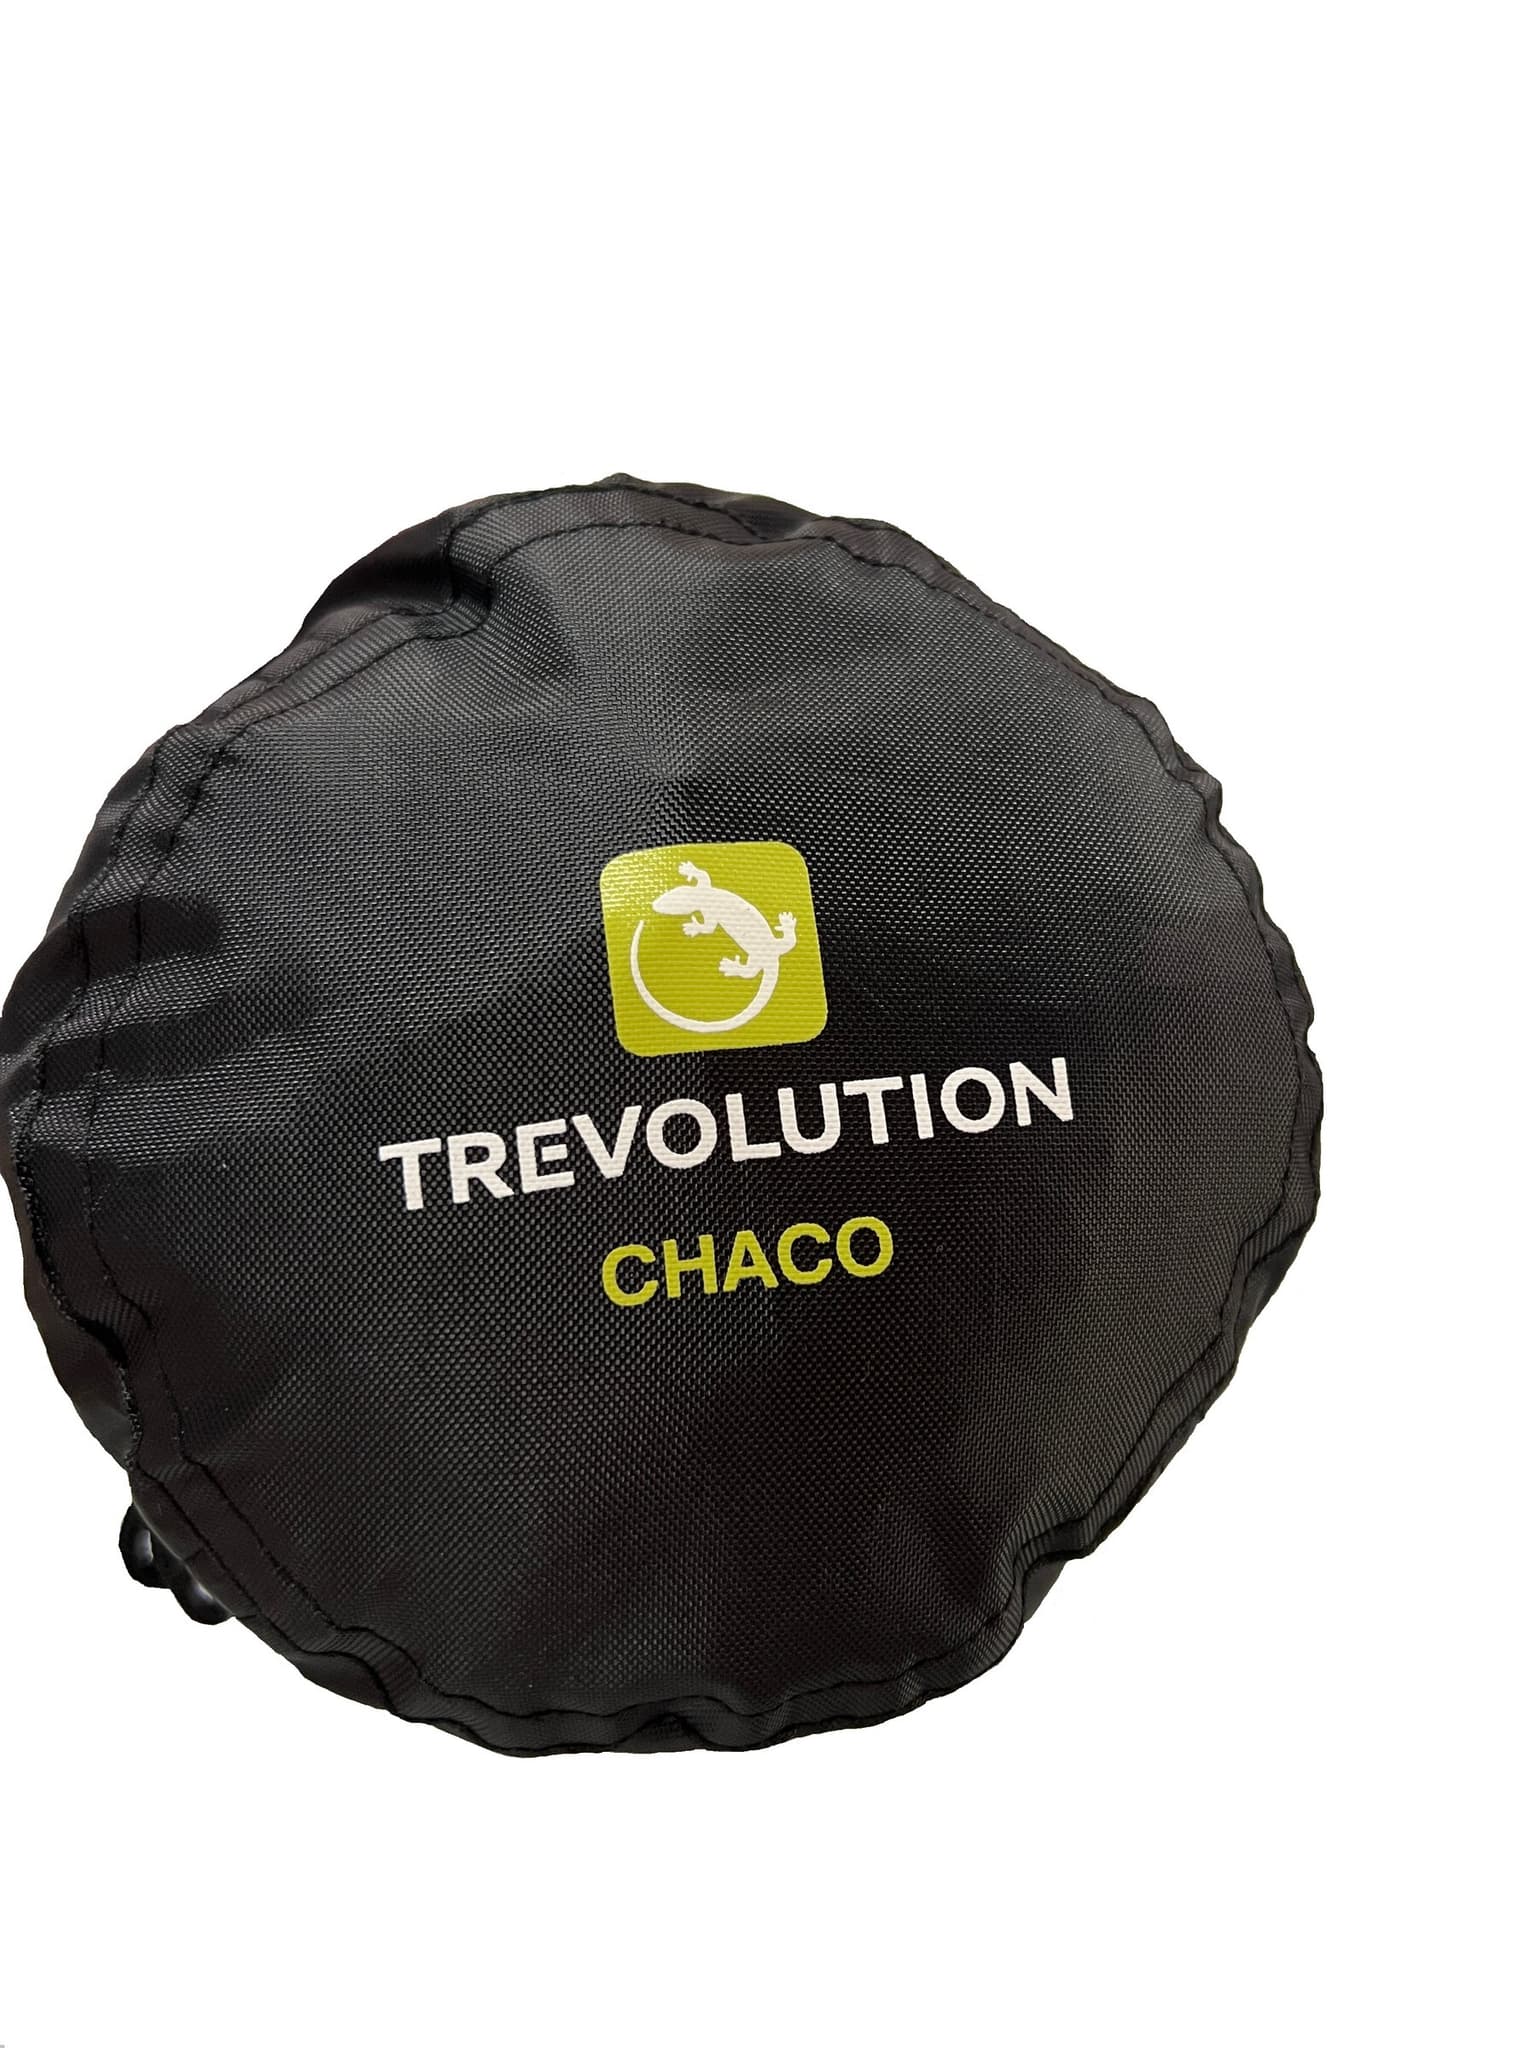 Trevolution Trevolution Chaco Kunstfaserschlafsack lime 7